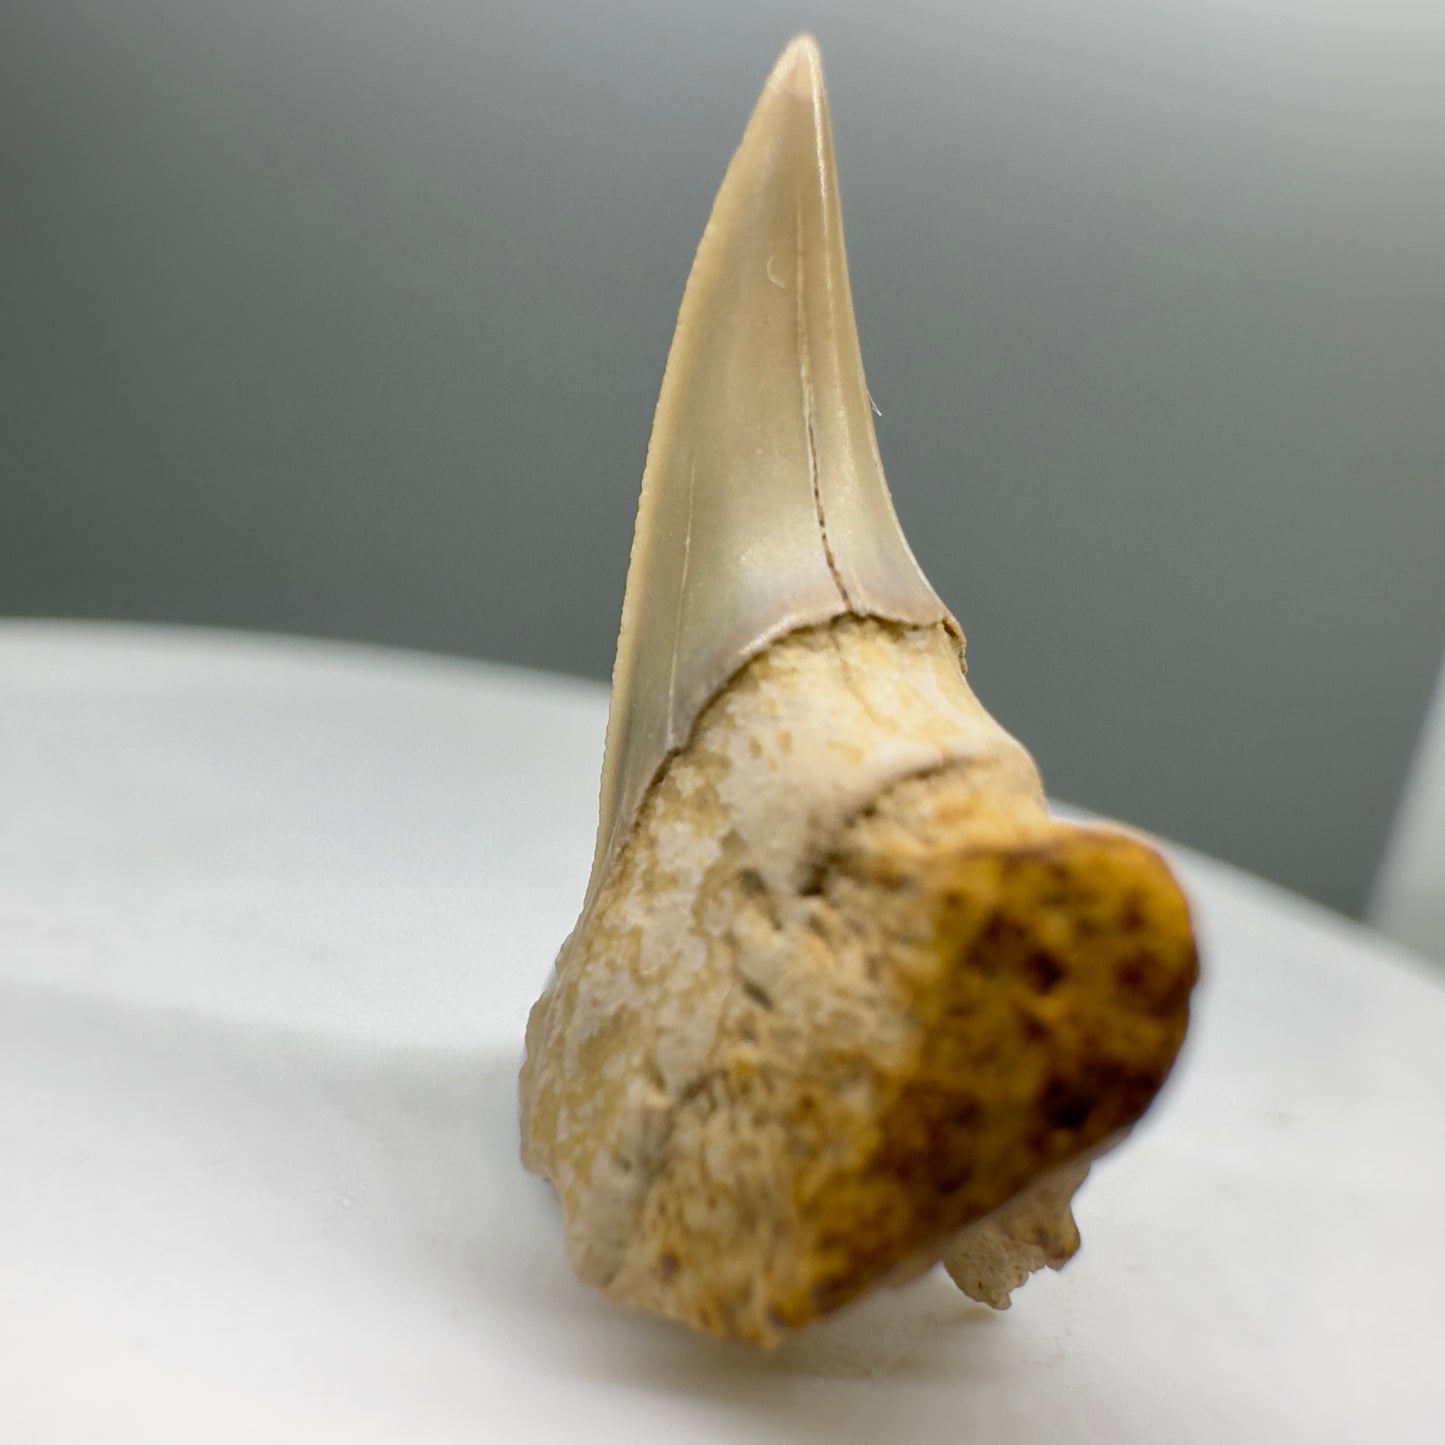 Rare 0.86" Fossil Paraisurus macrorhiza Shark Tooth - Russia R548 - Front left